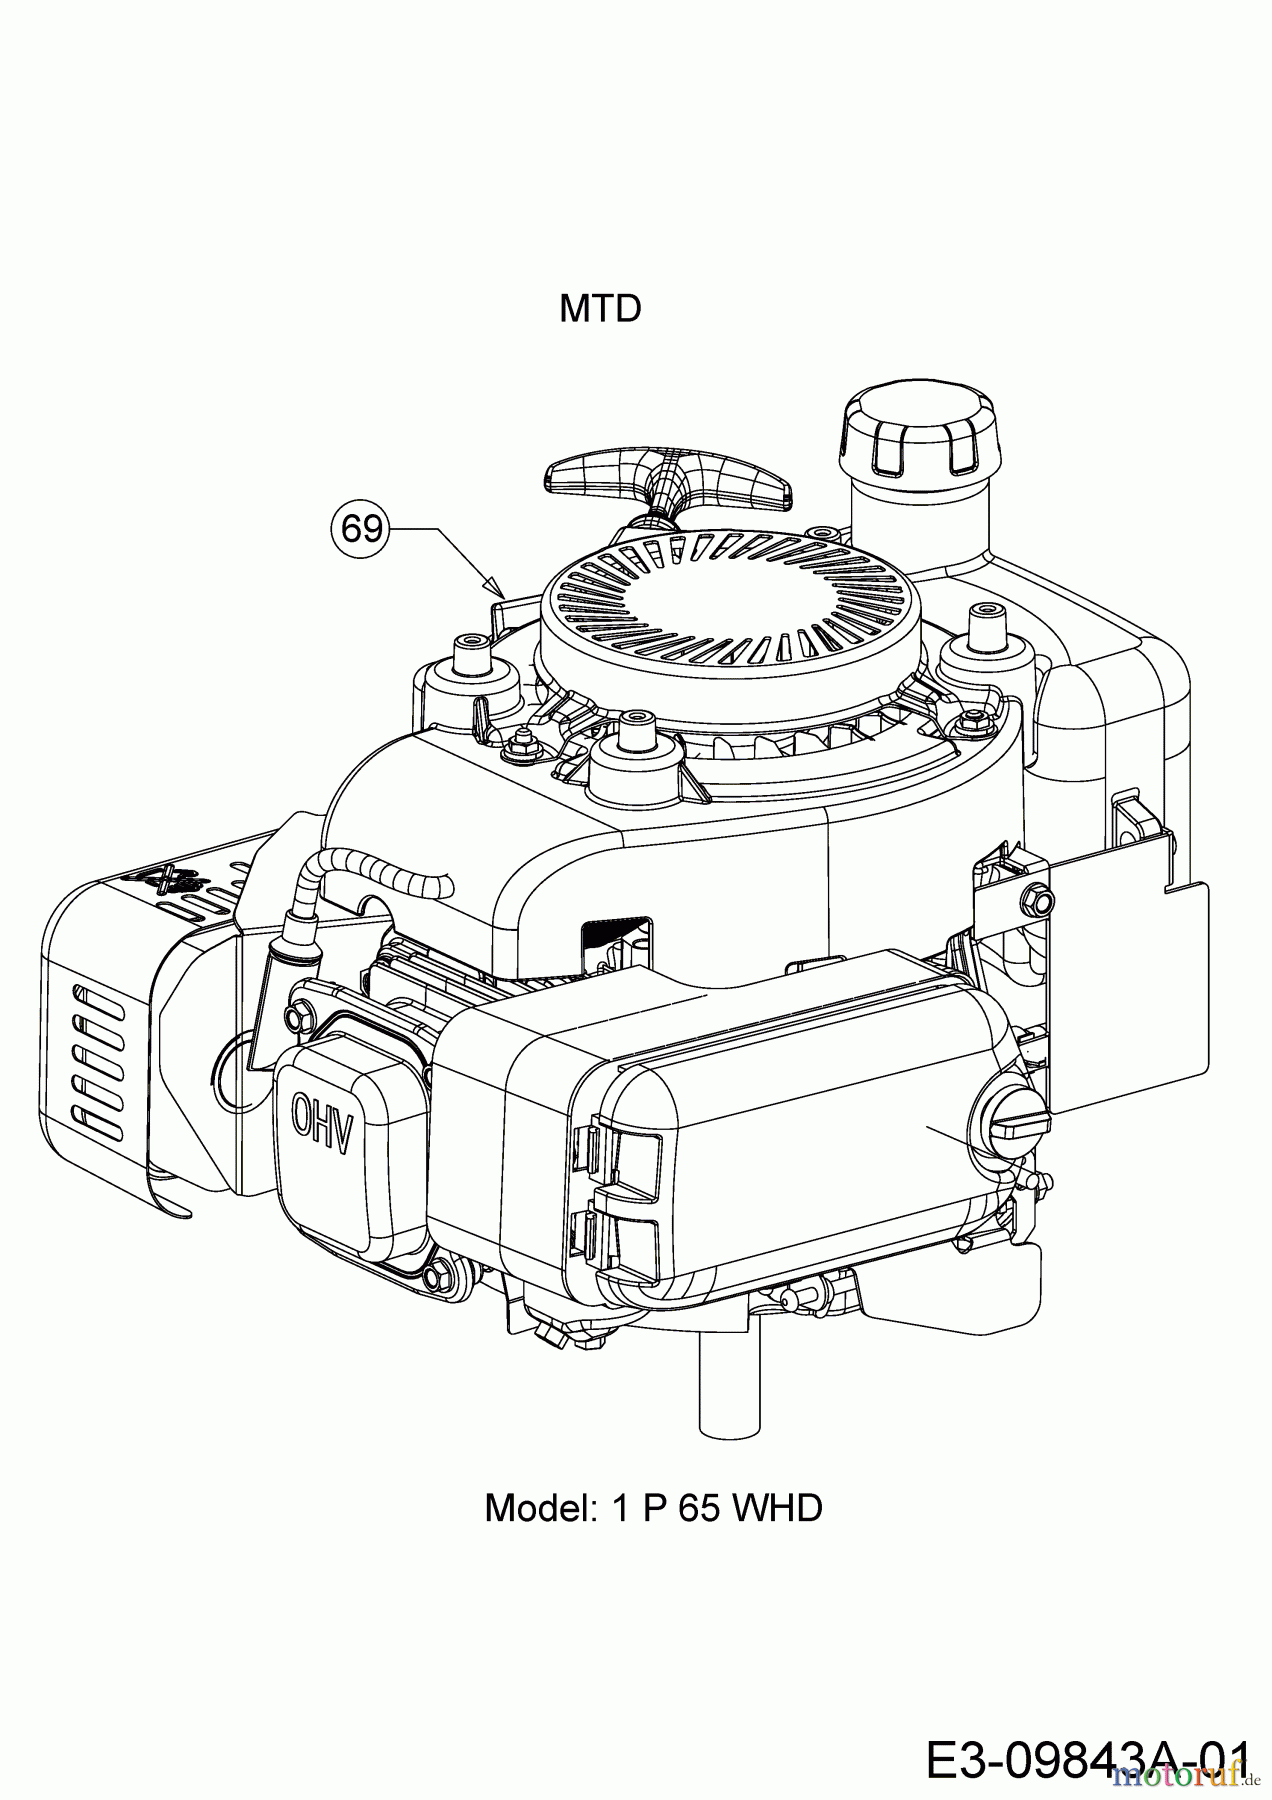  MTD Tillers T/205 21D-20MI678  (2018) Engine MTD